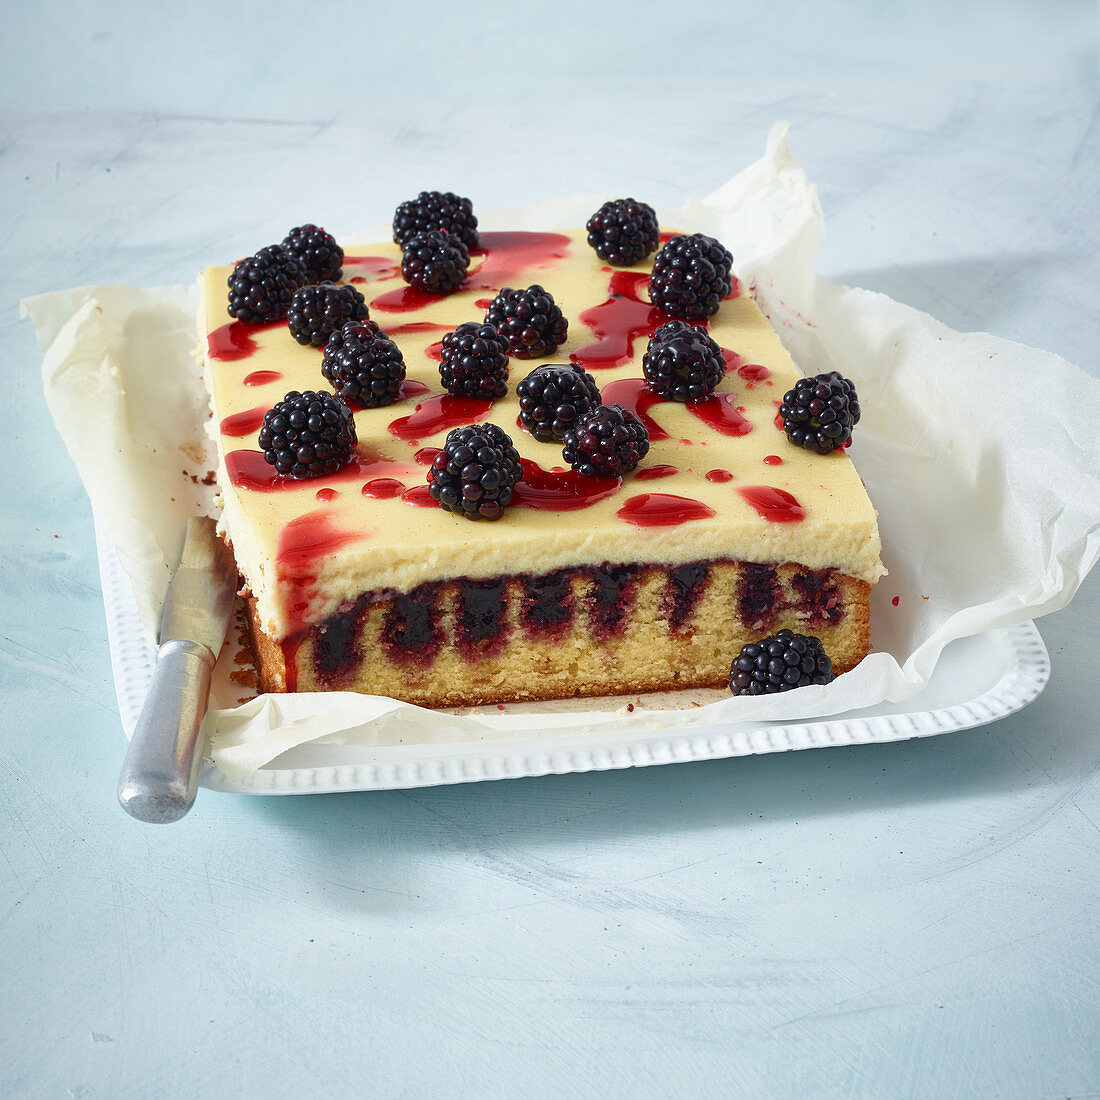 Blackberry and semolina pudding poke cake